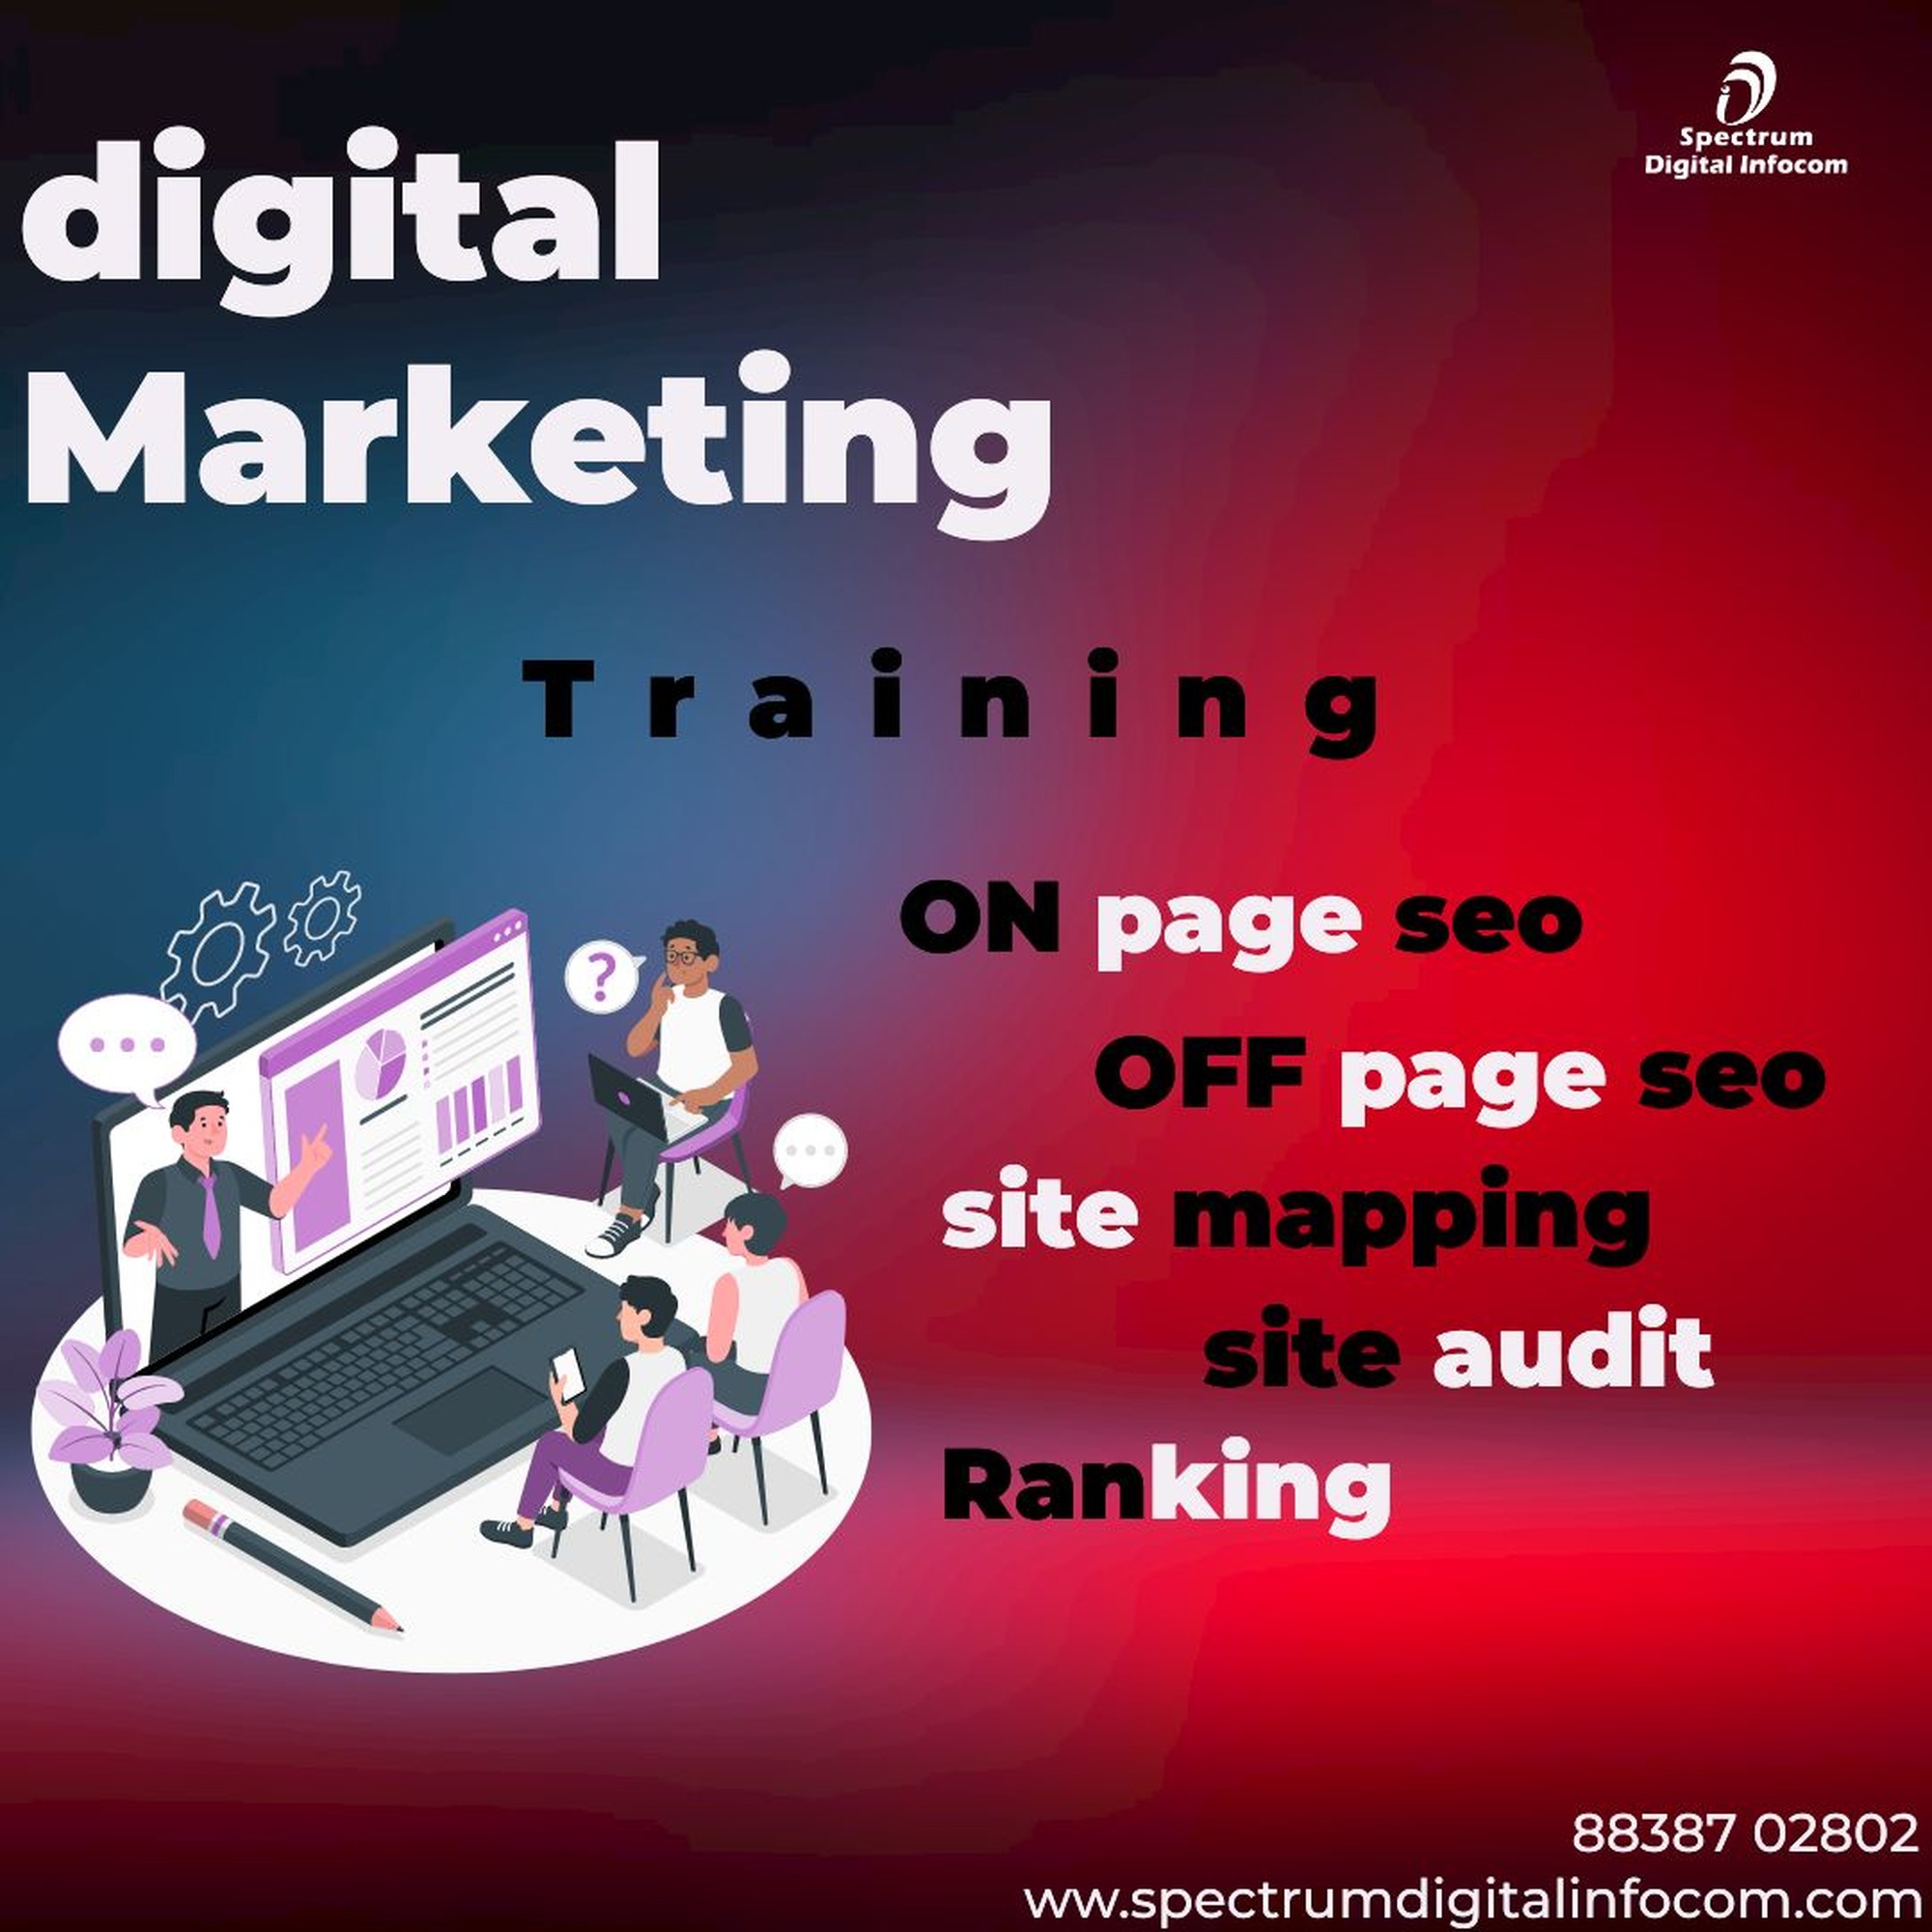 digital marketing training in Coimbatore090, Online Event